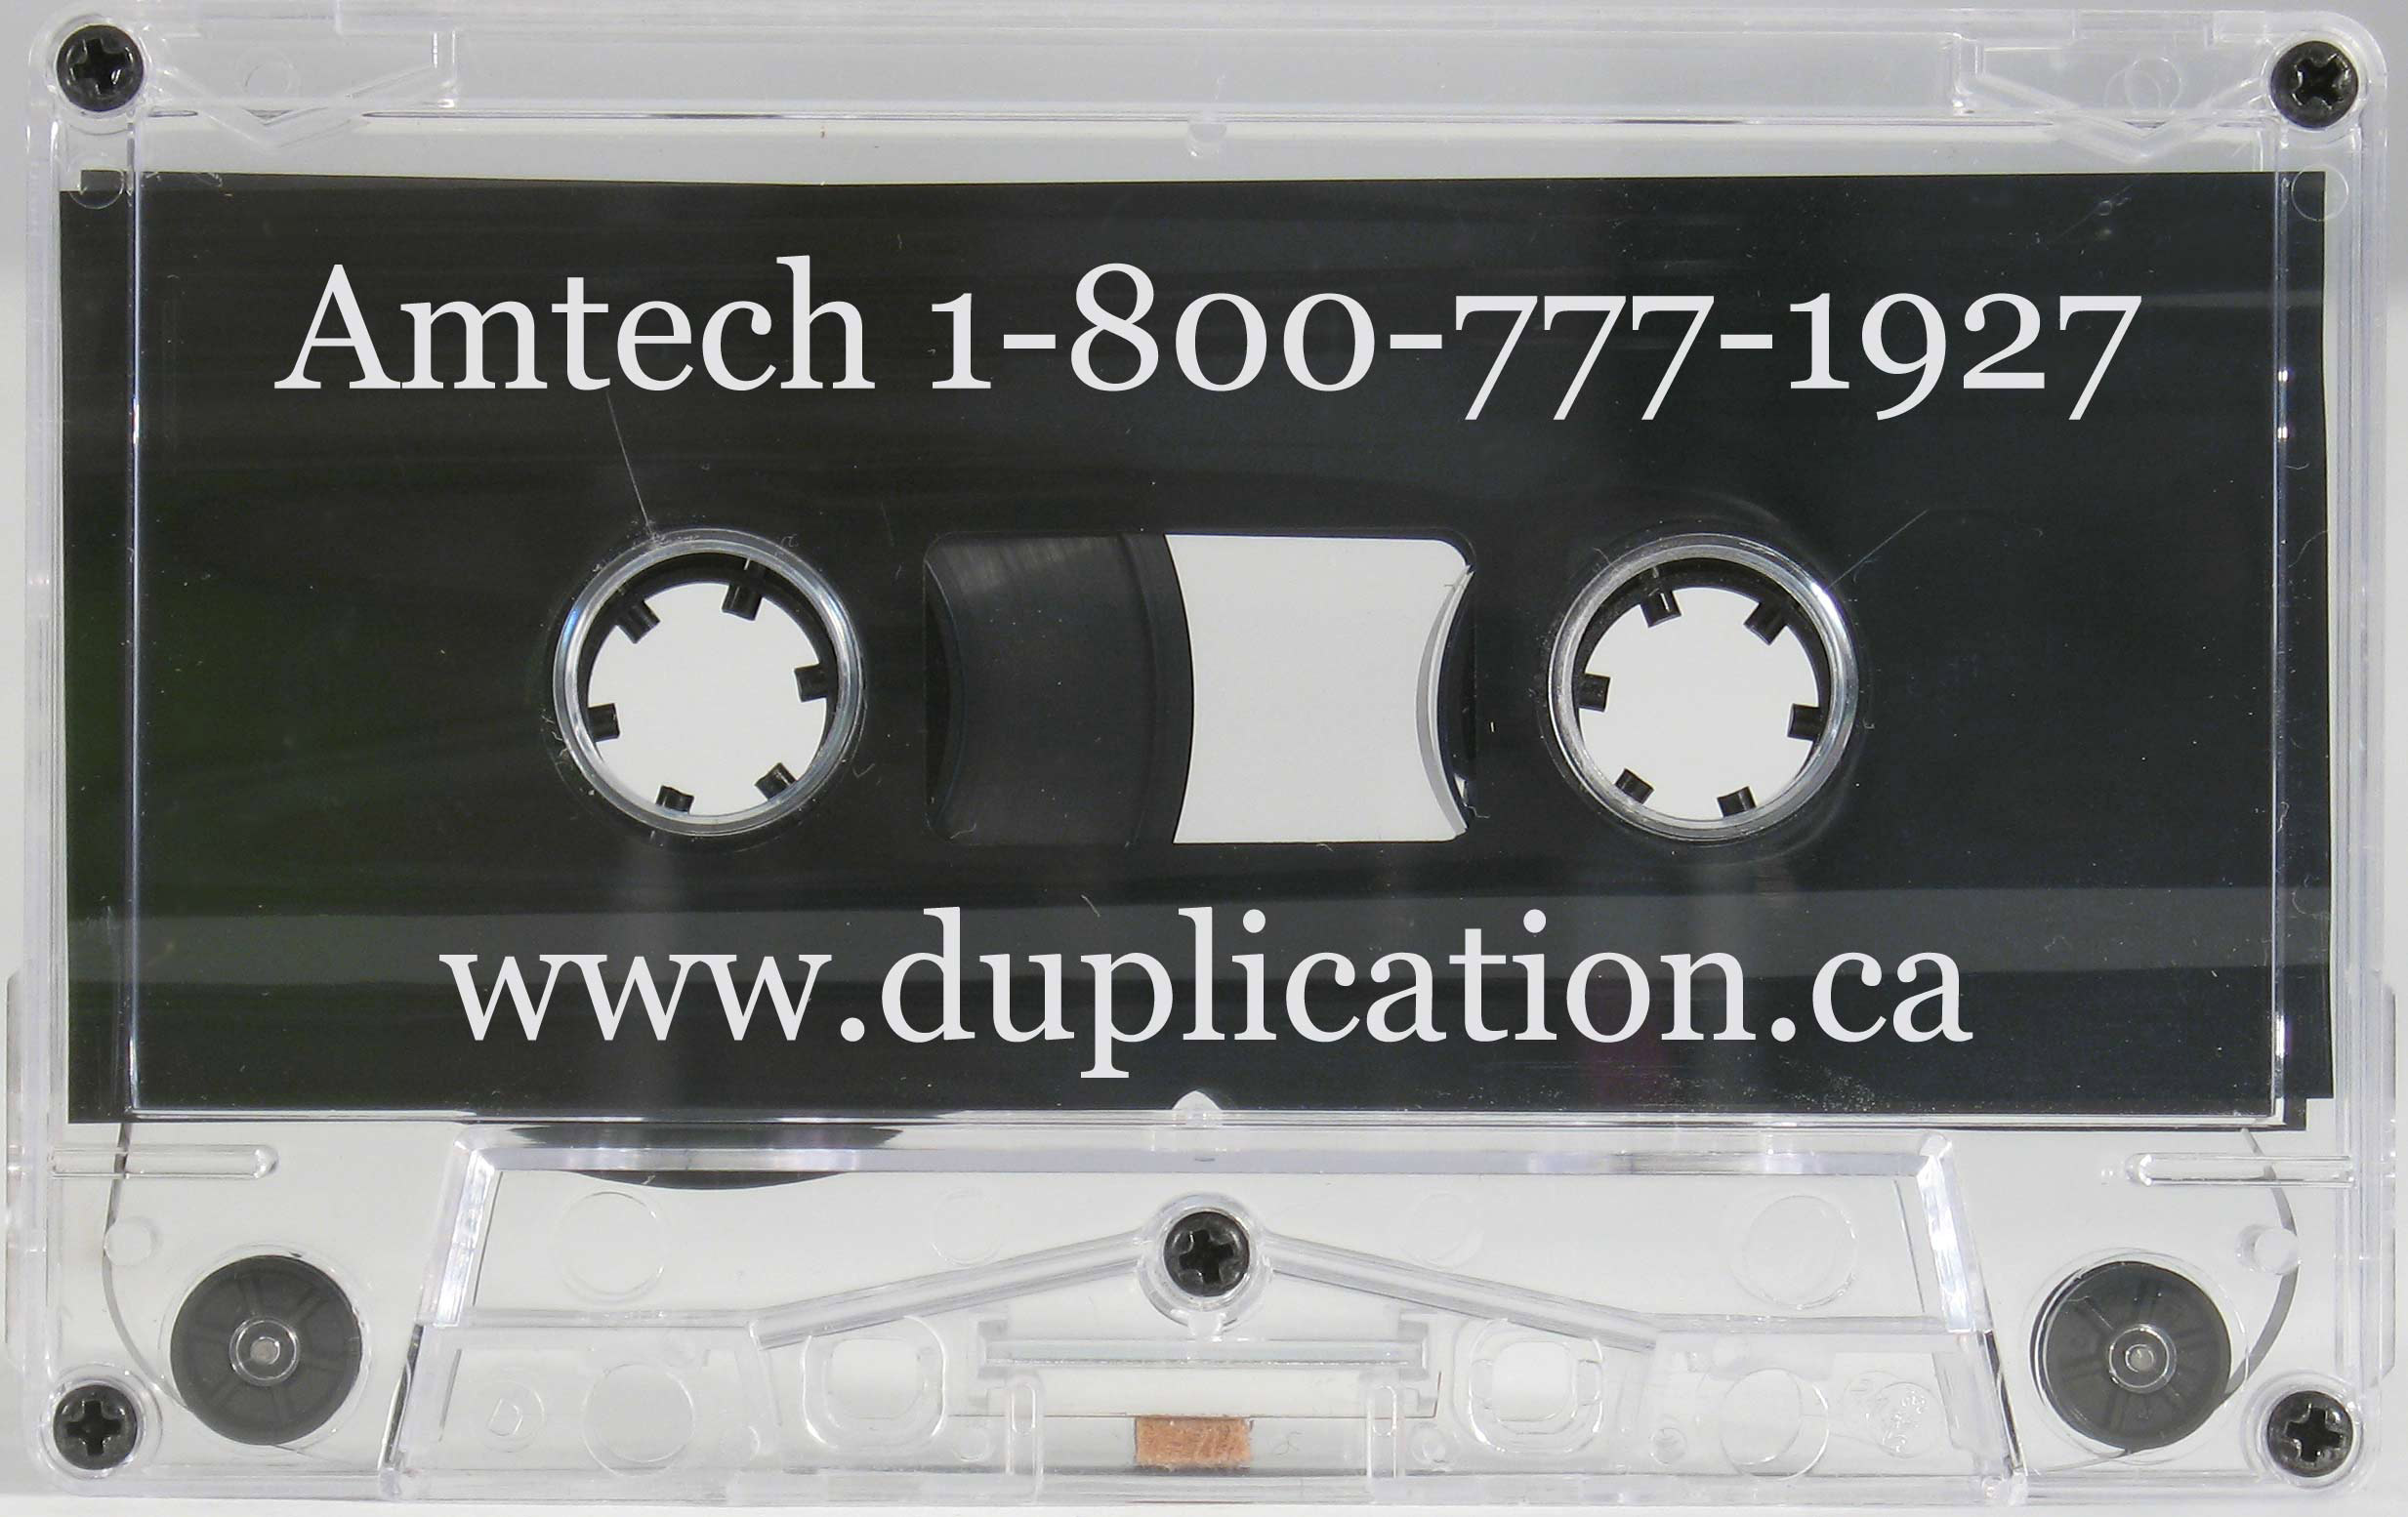 chrome cassette made by Amtech - Analogue Media Technologies inc